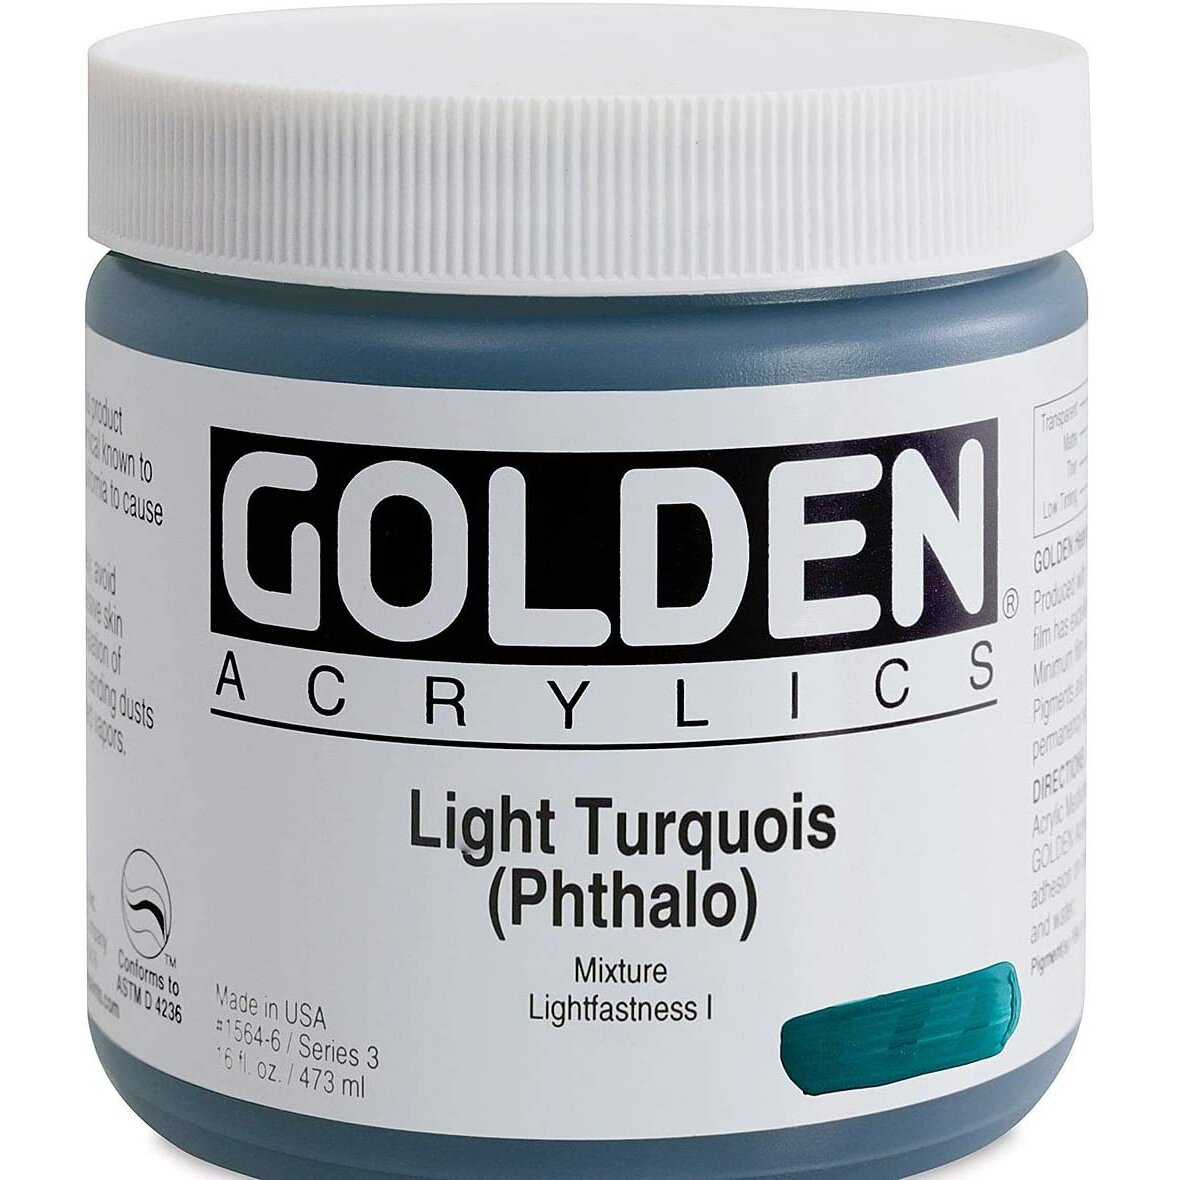 Golden Heavy Body Acrylic - Light Turquois (Phthalo) - 16oz Jar